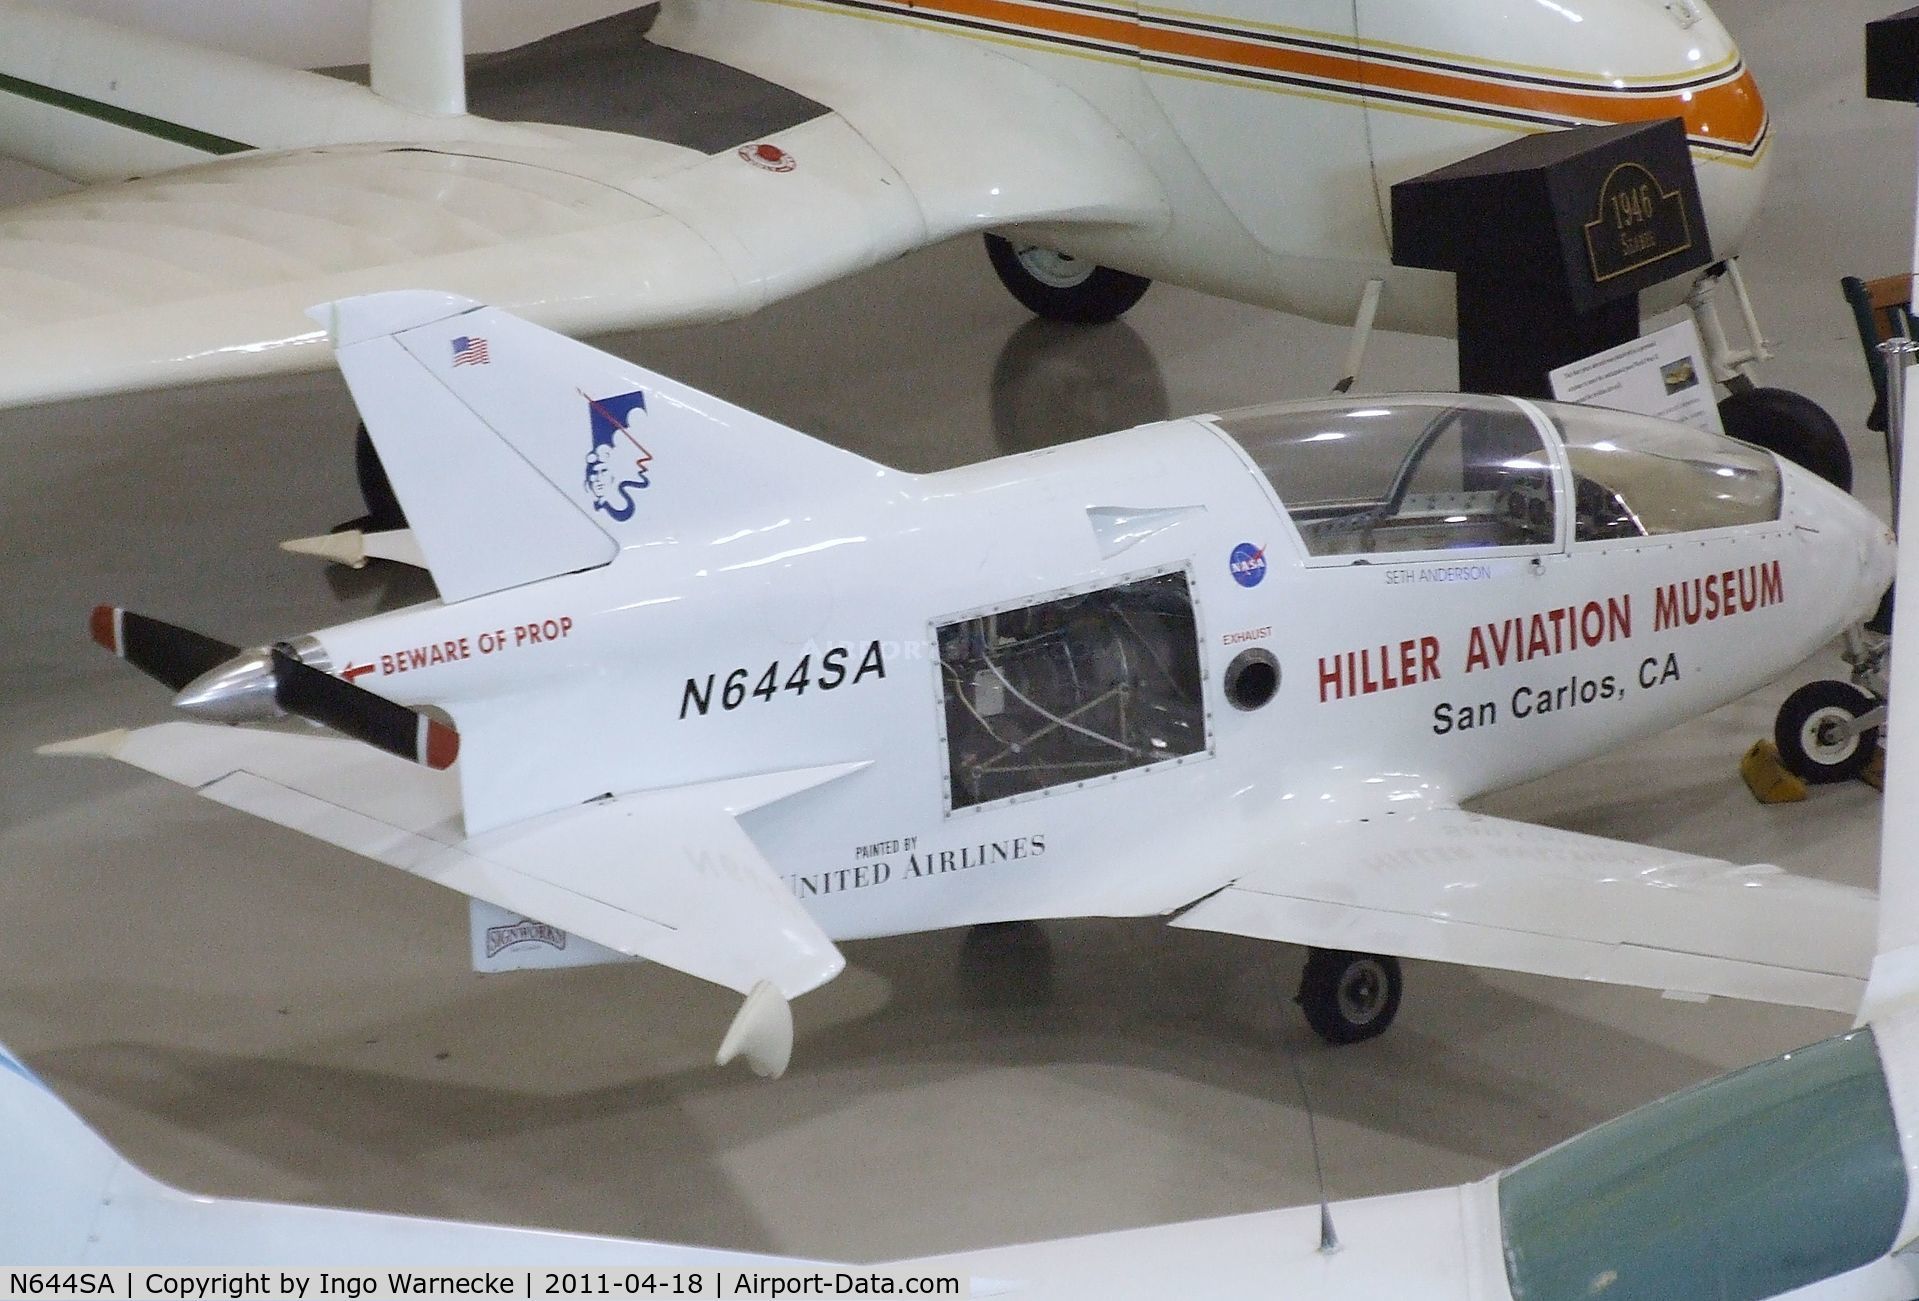 N644SA, Bede BD-5B C/N 1 (N644SA), Bede BD-5B at the Hiller Aviation Museum, San Carlos CA